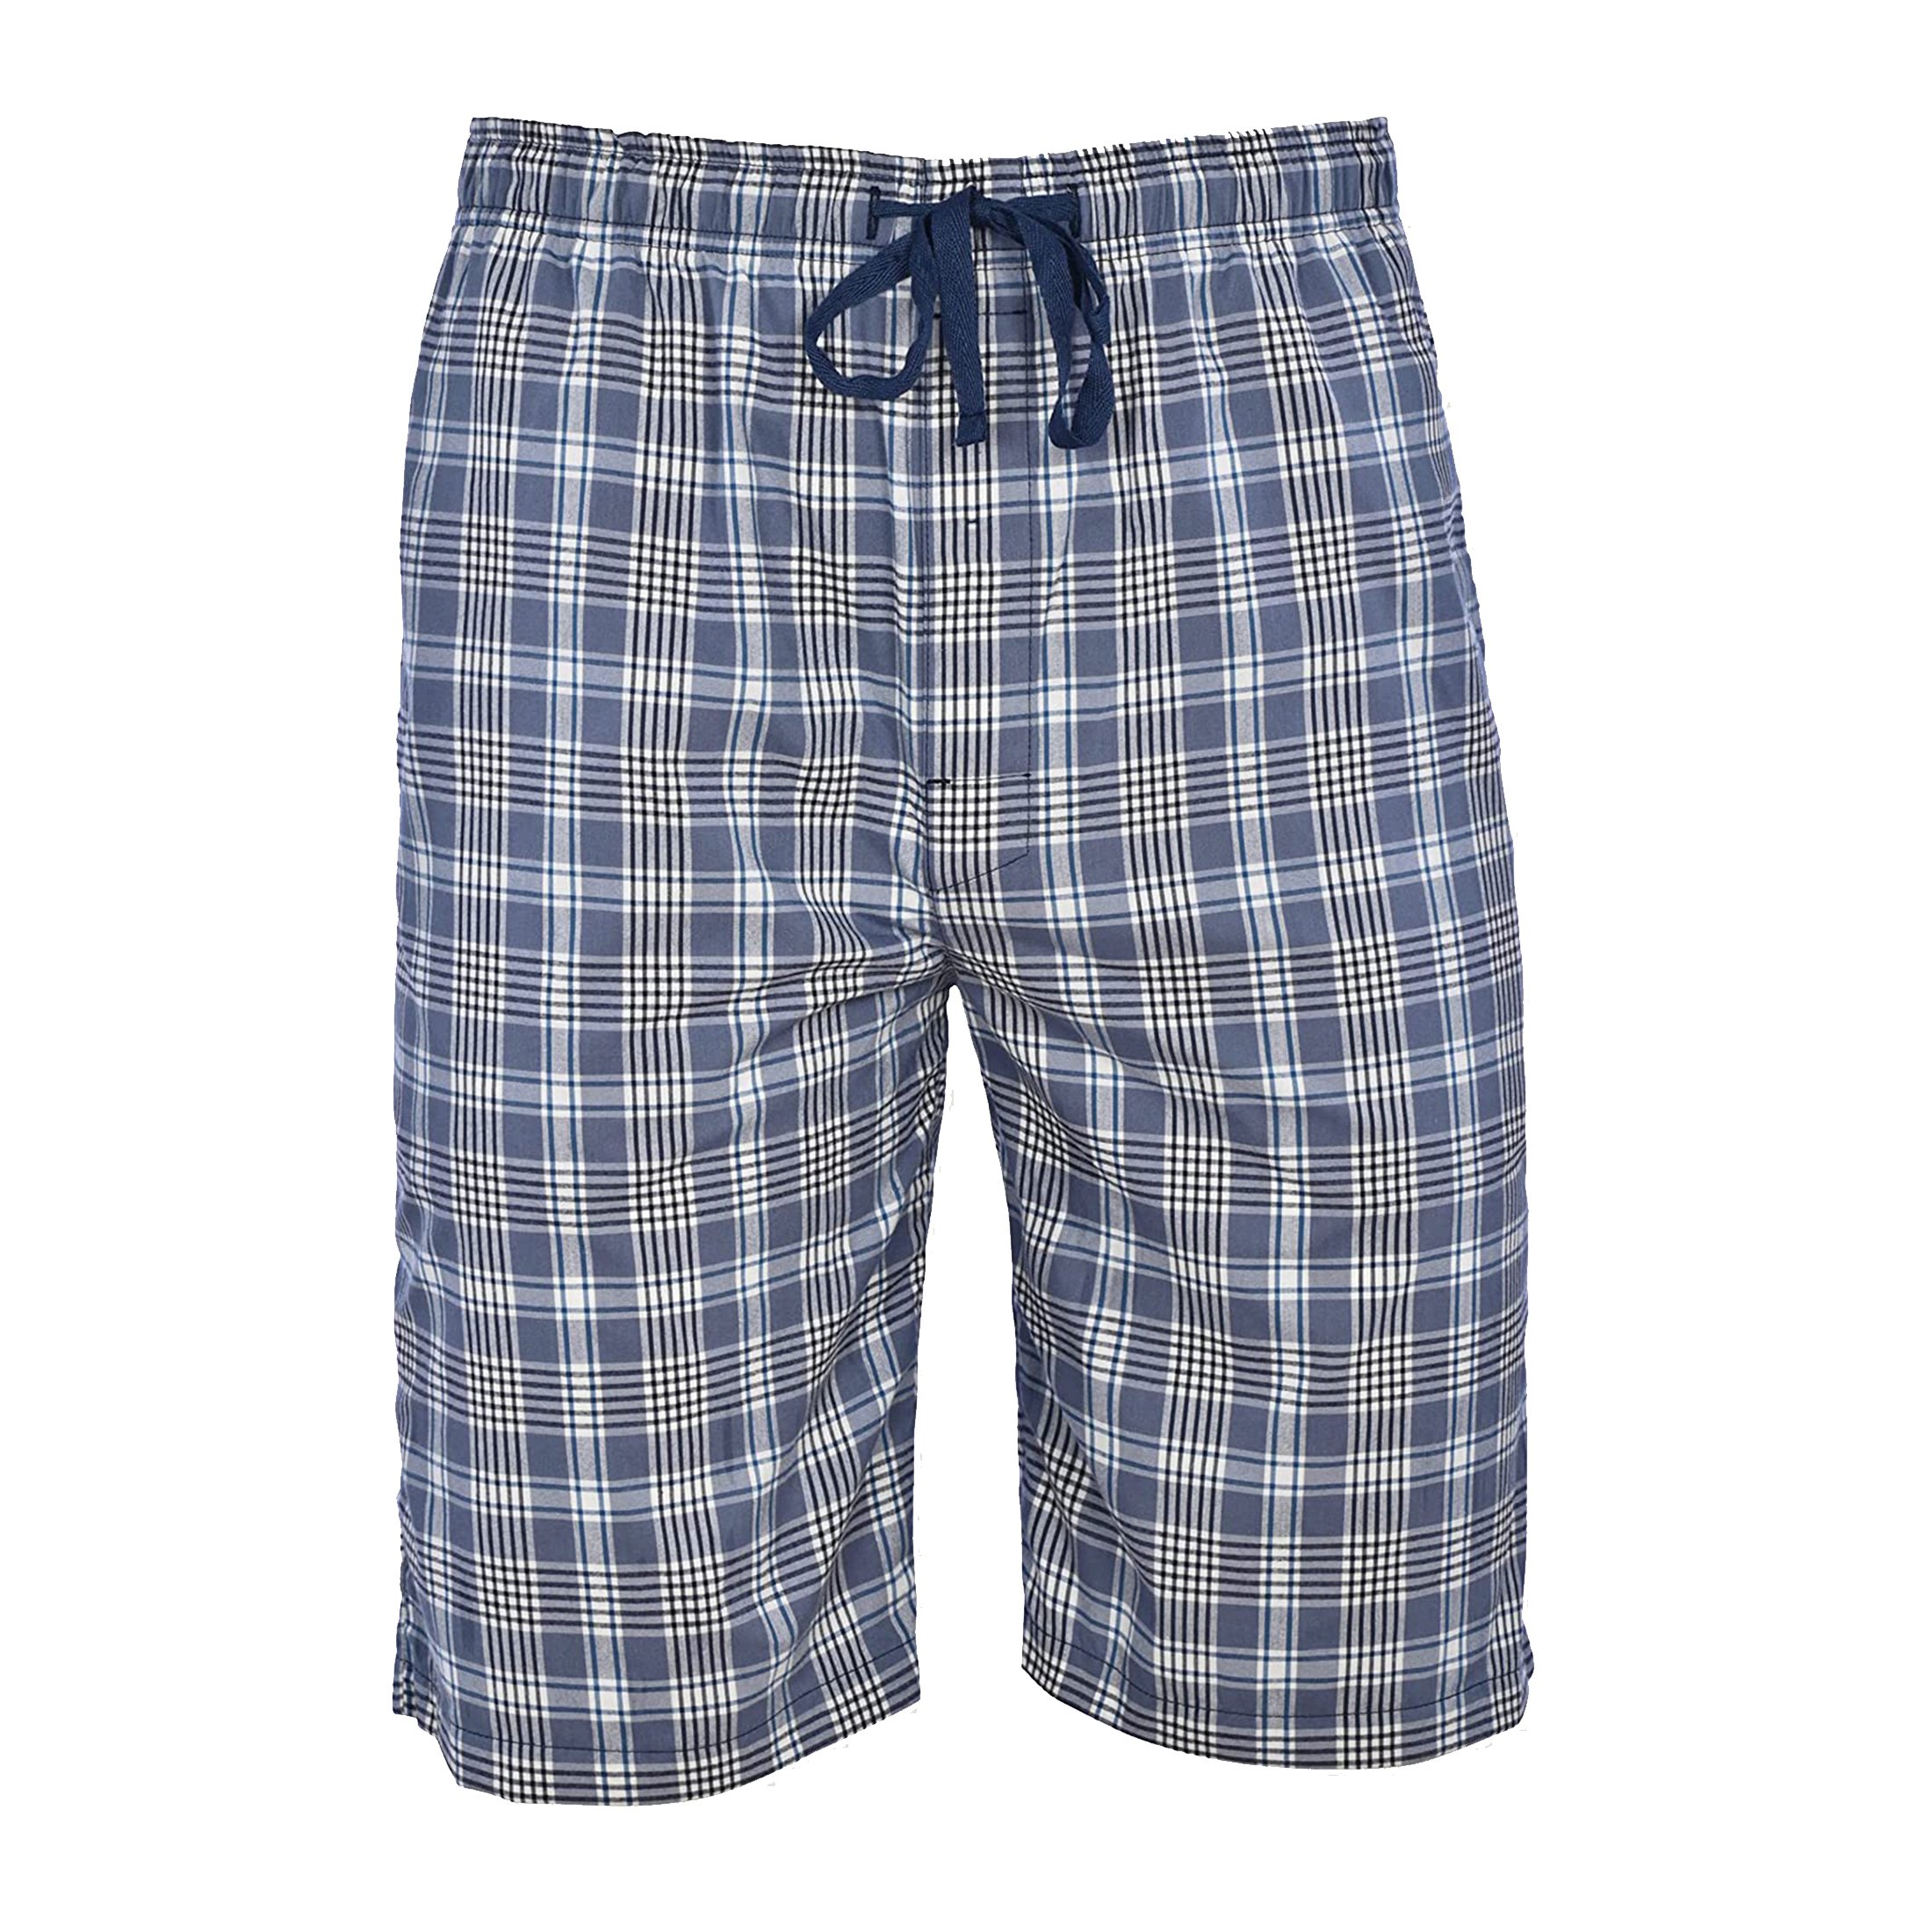 Multi-Pack: Men's Ultra-Soft Jersey Knit Sleep Lounge Pajama Shorts For Sleepwear - Plaid, 1 Pack, Medium